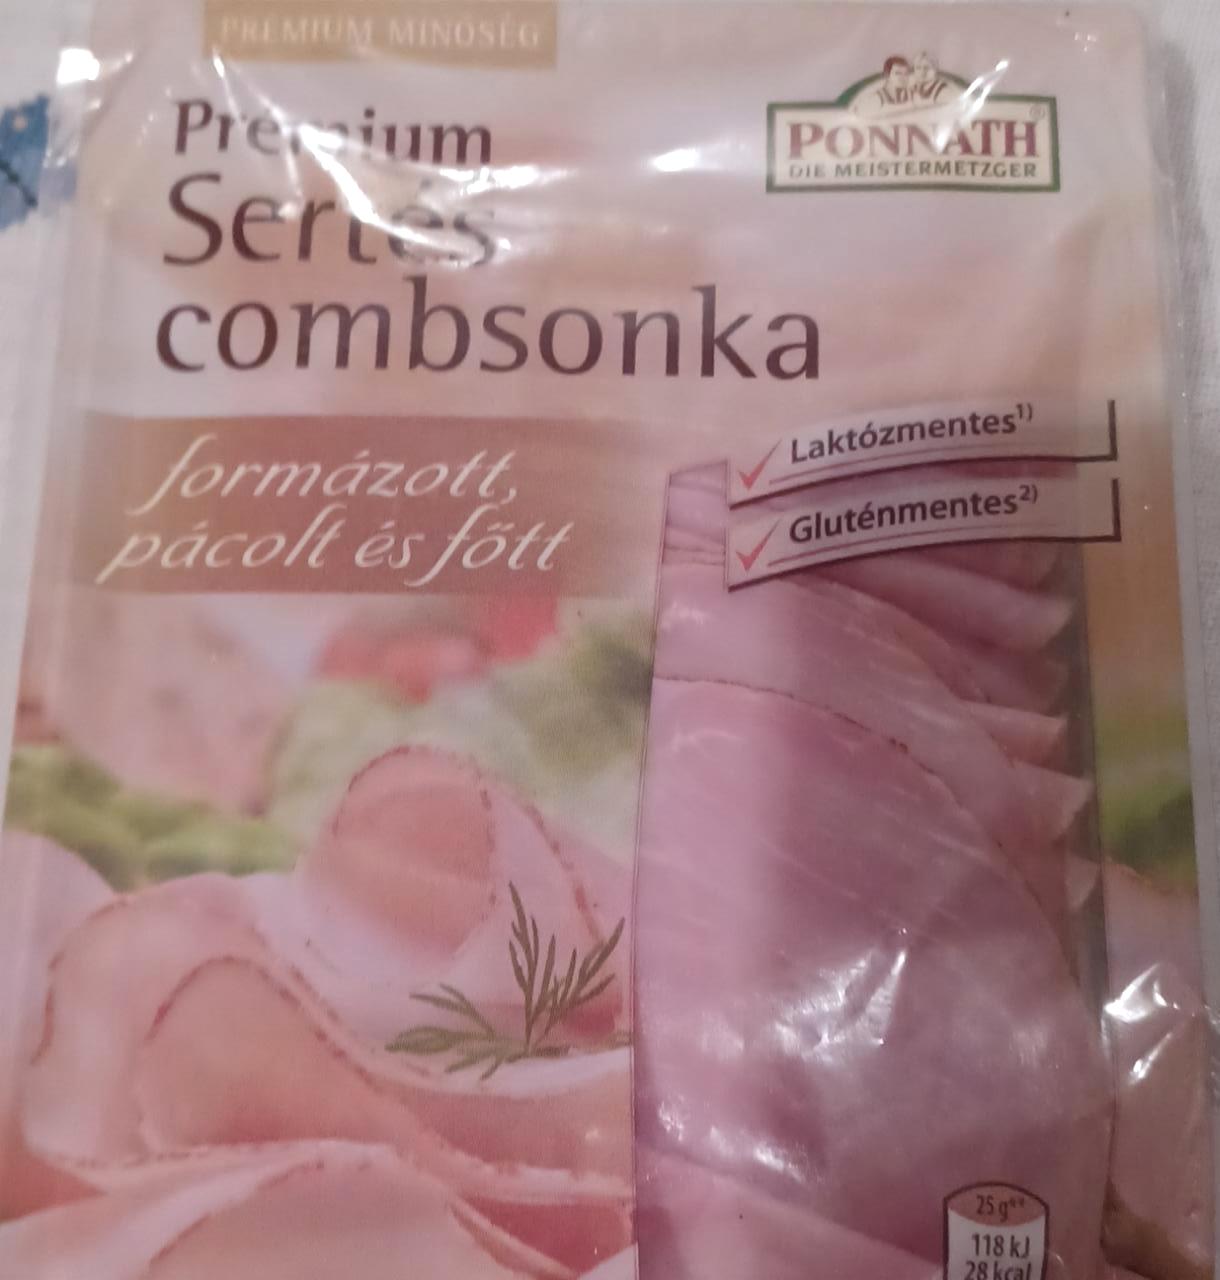 Képek - Premium sertés combsonka Ponnath